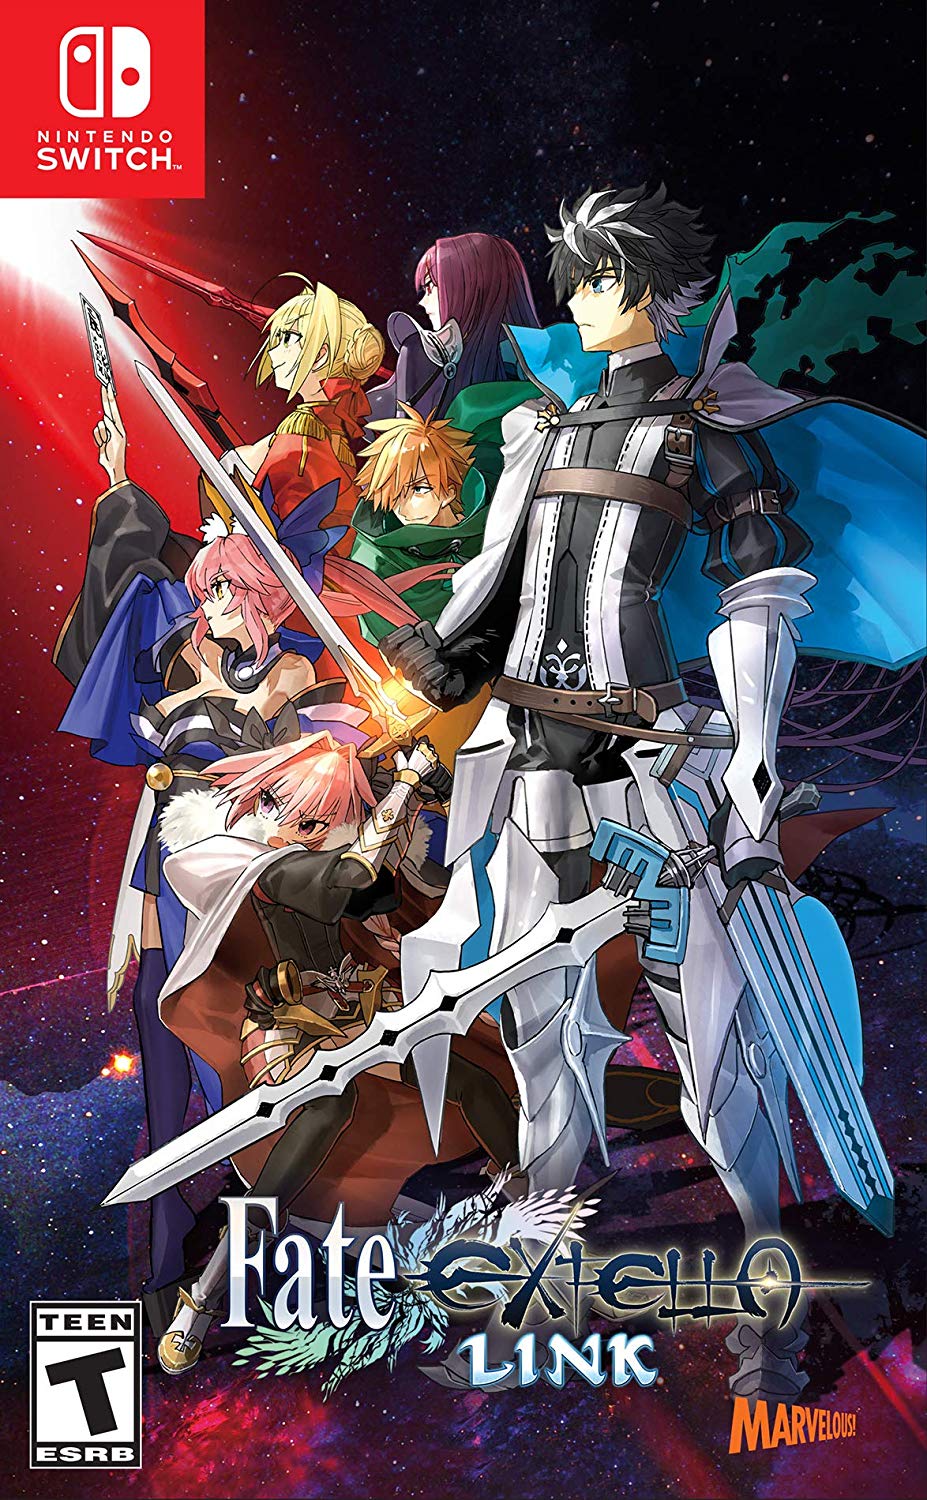 The Gamer - Manga Review - Fate/Extella Gameplay 